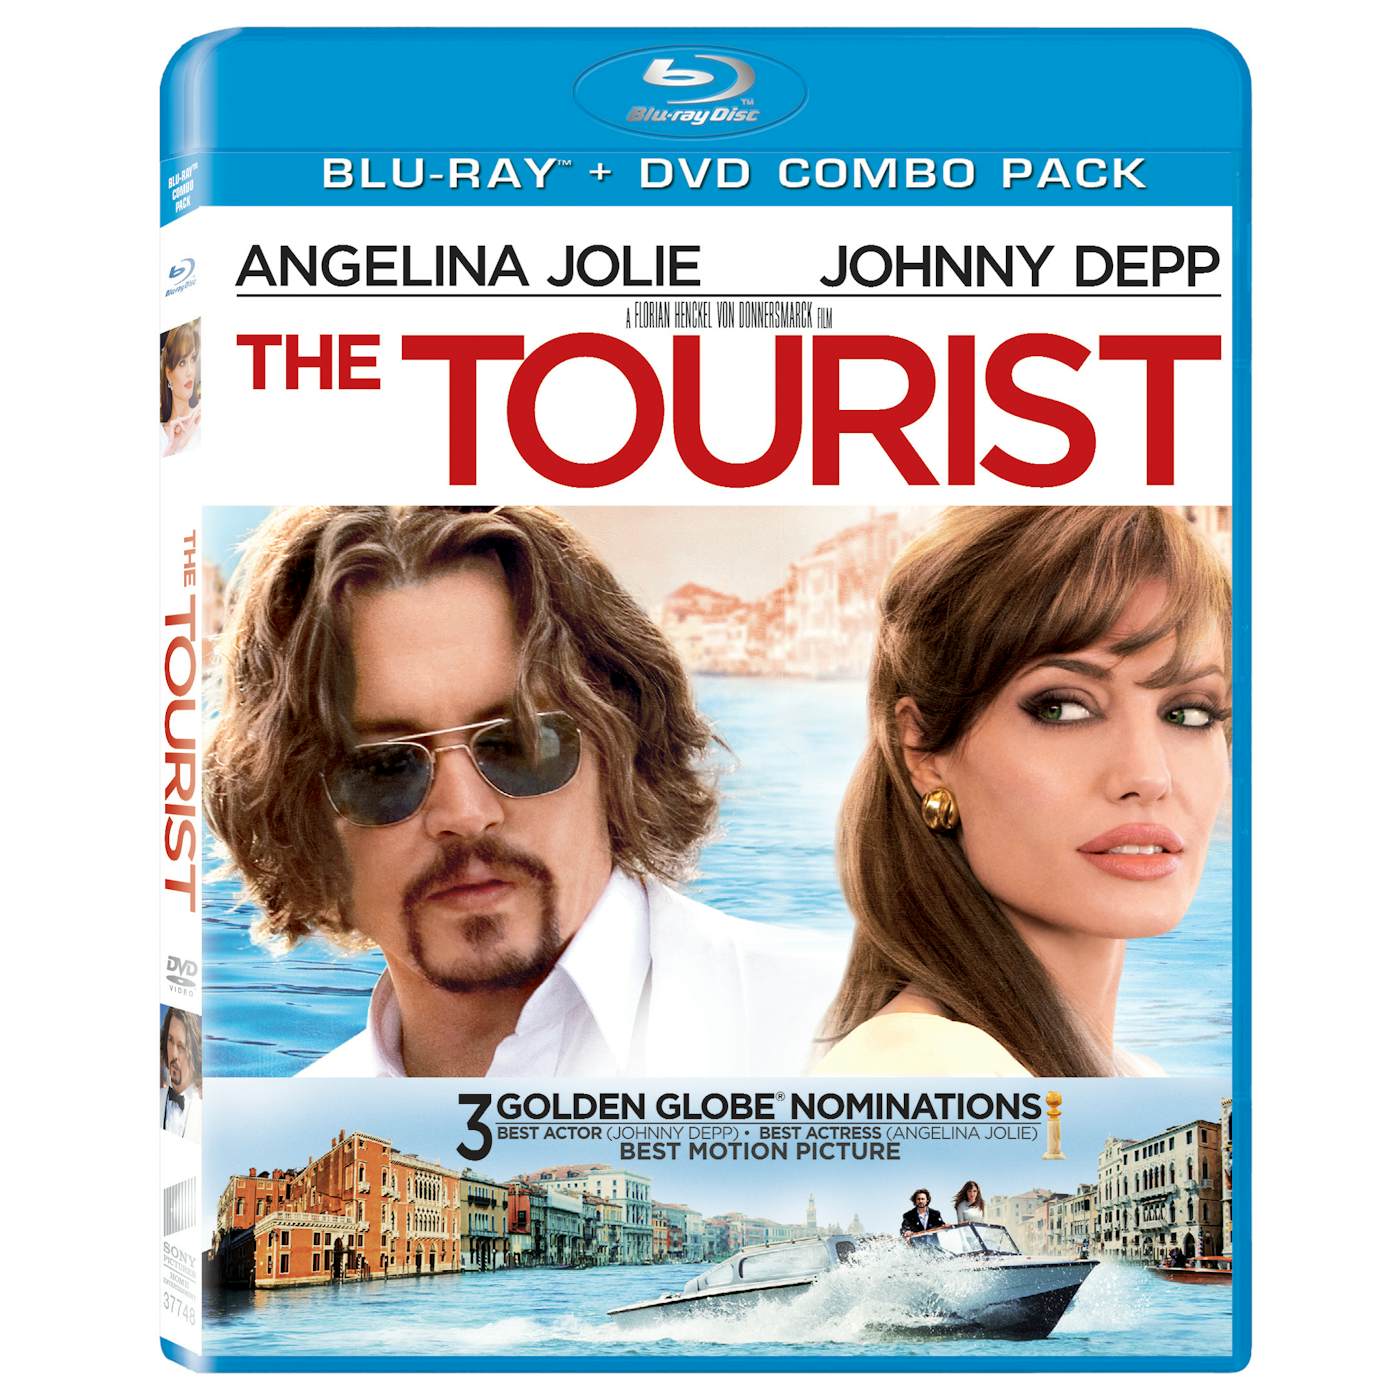 TOURIST Blu-ray